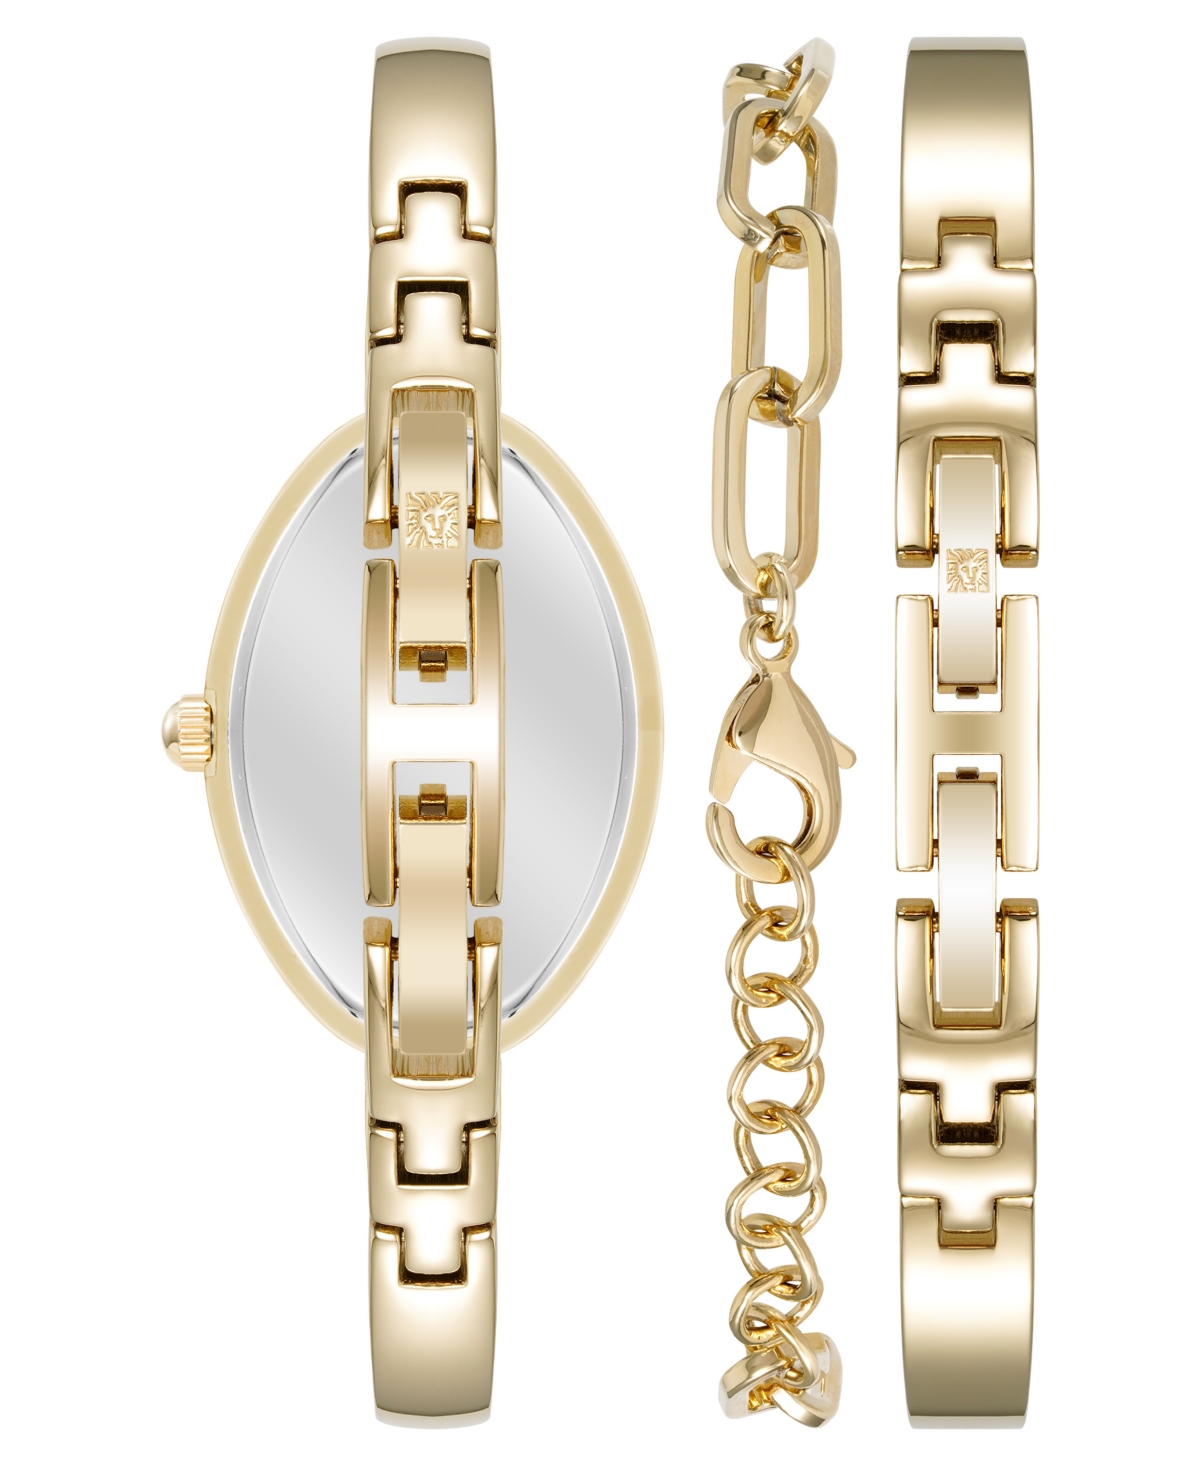 Shop Anne Klein Women's Quartz Gold-tone Alloy Bangle Watch Set, 20mm